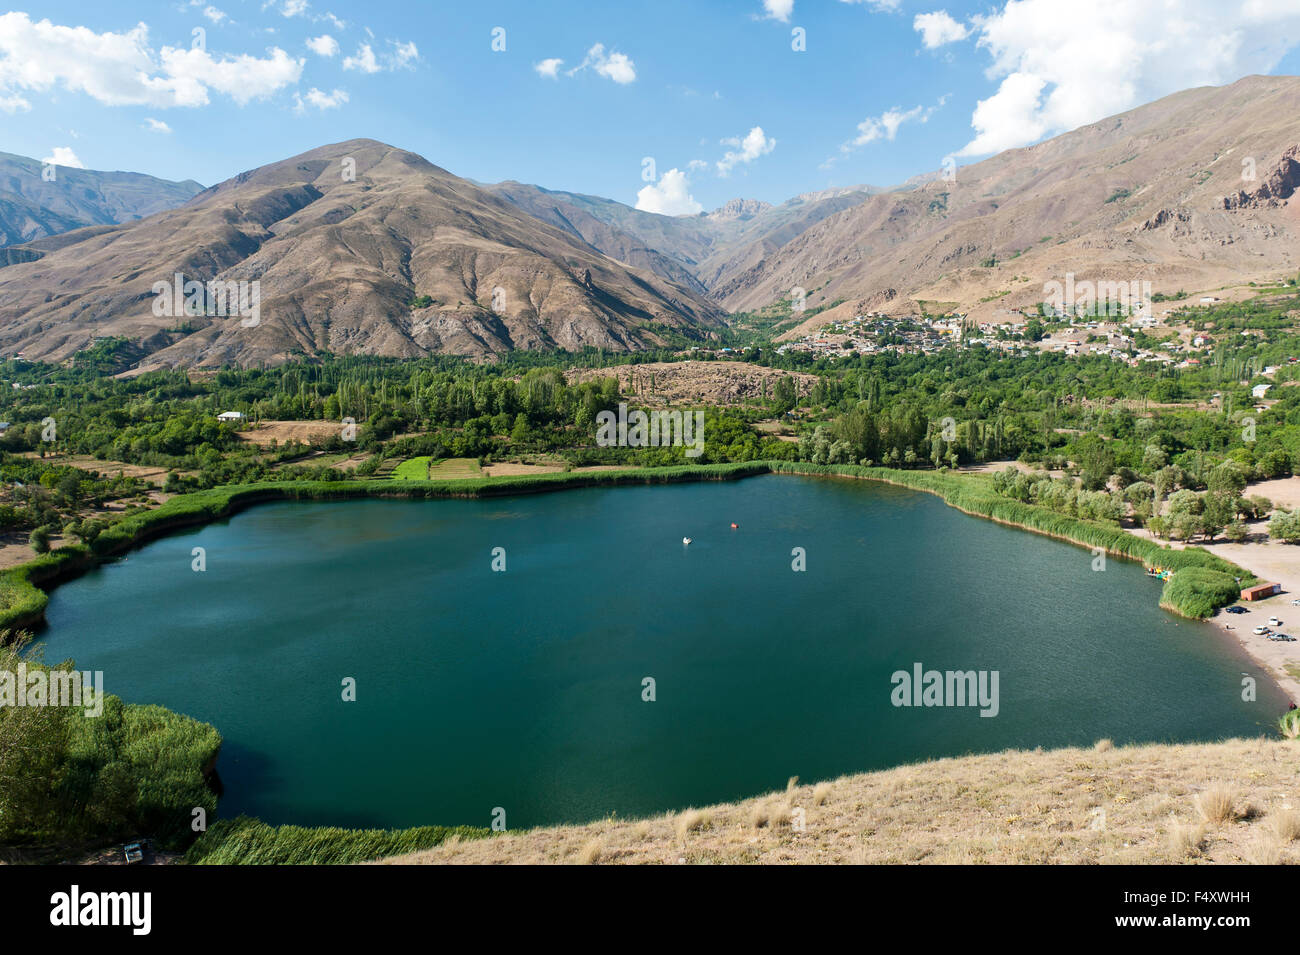 Mountain lake, reeds on shore, Ovan Lake, Moallem Kalayeh, Alamut region, Qazvin province, Alborz, Iran Stock Photo